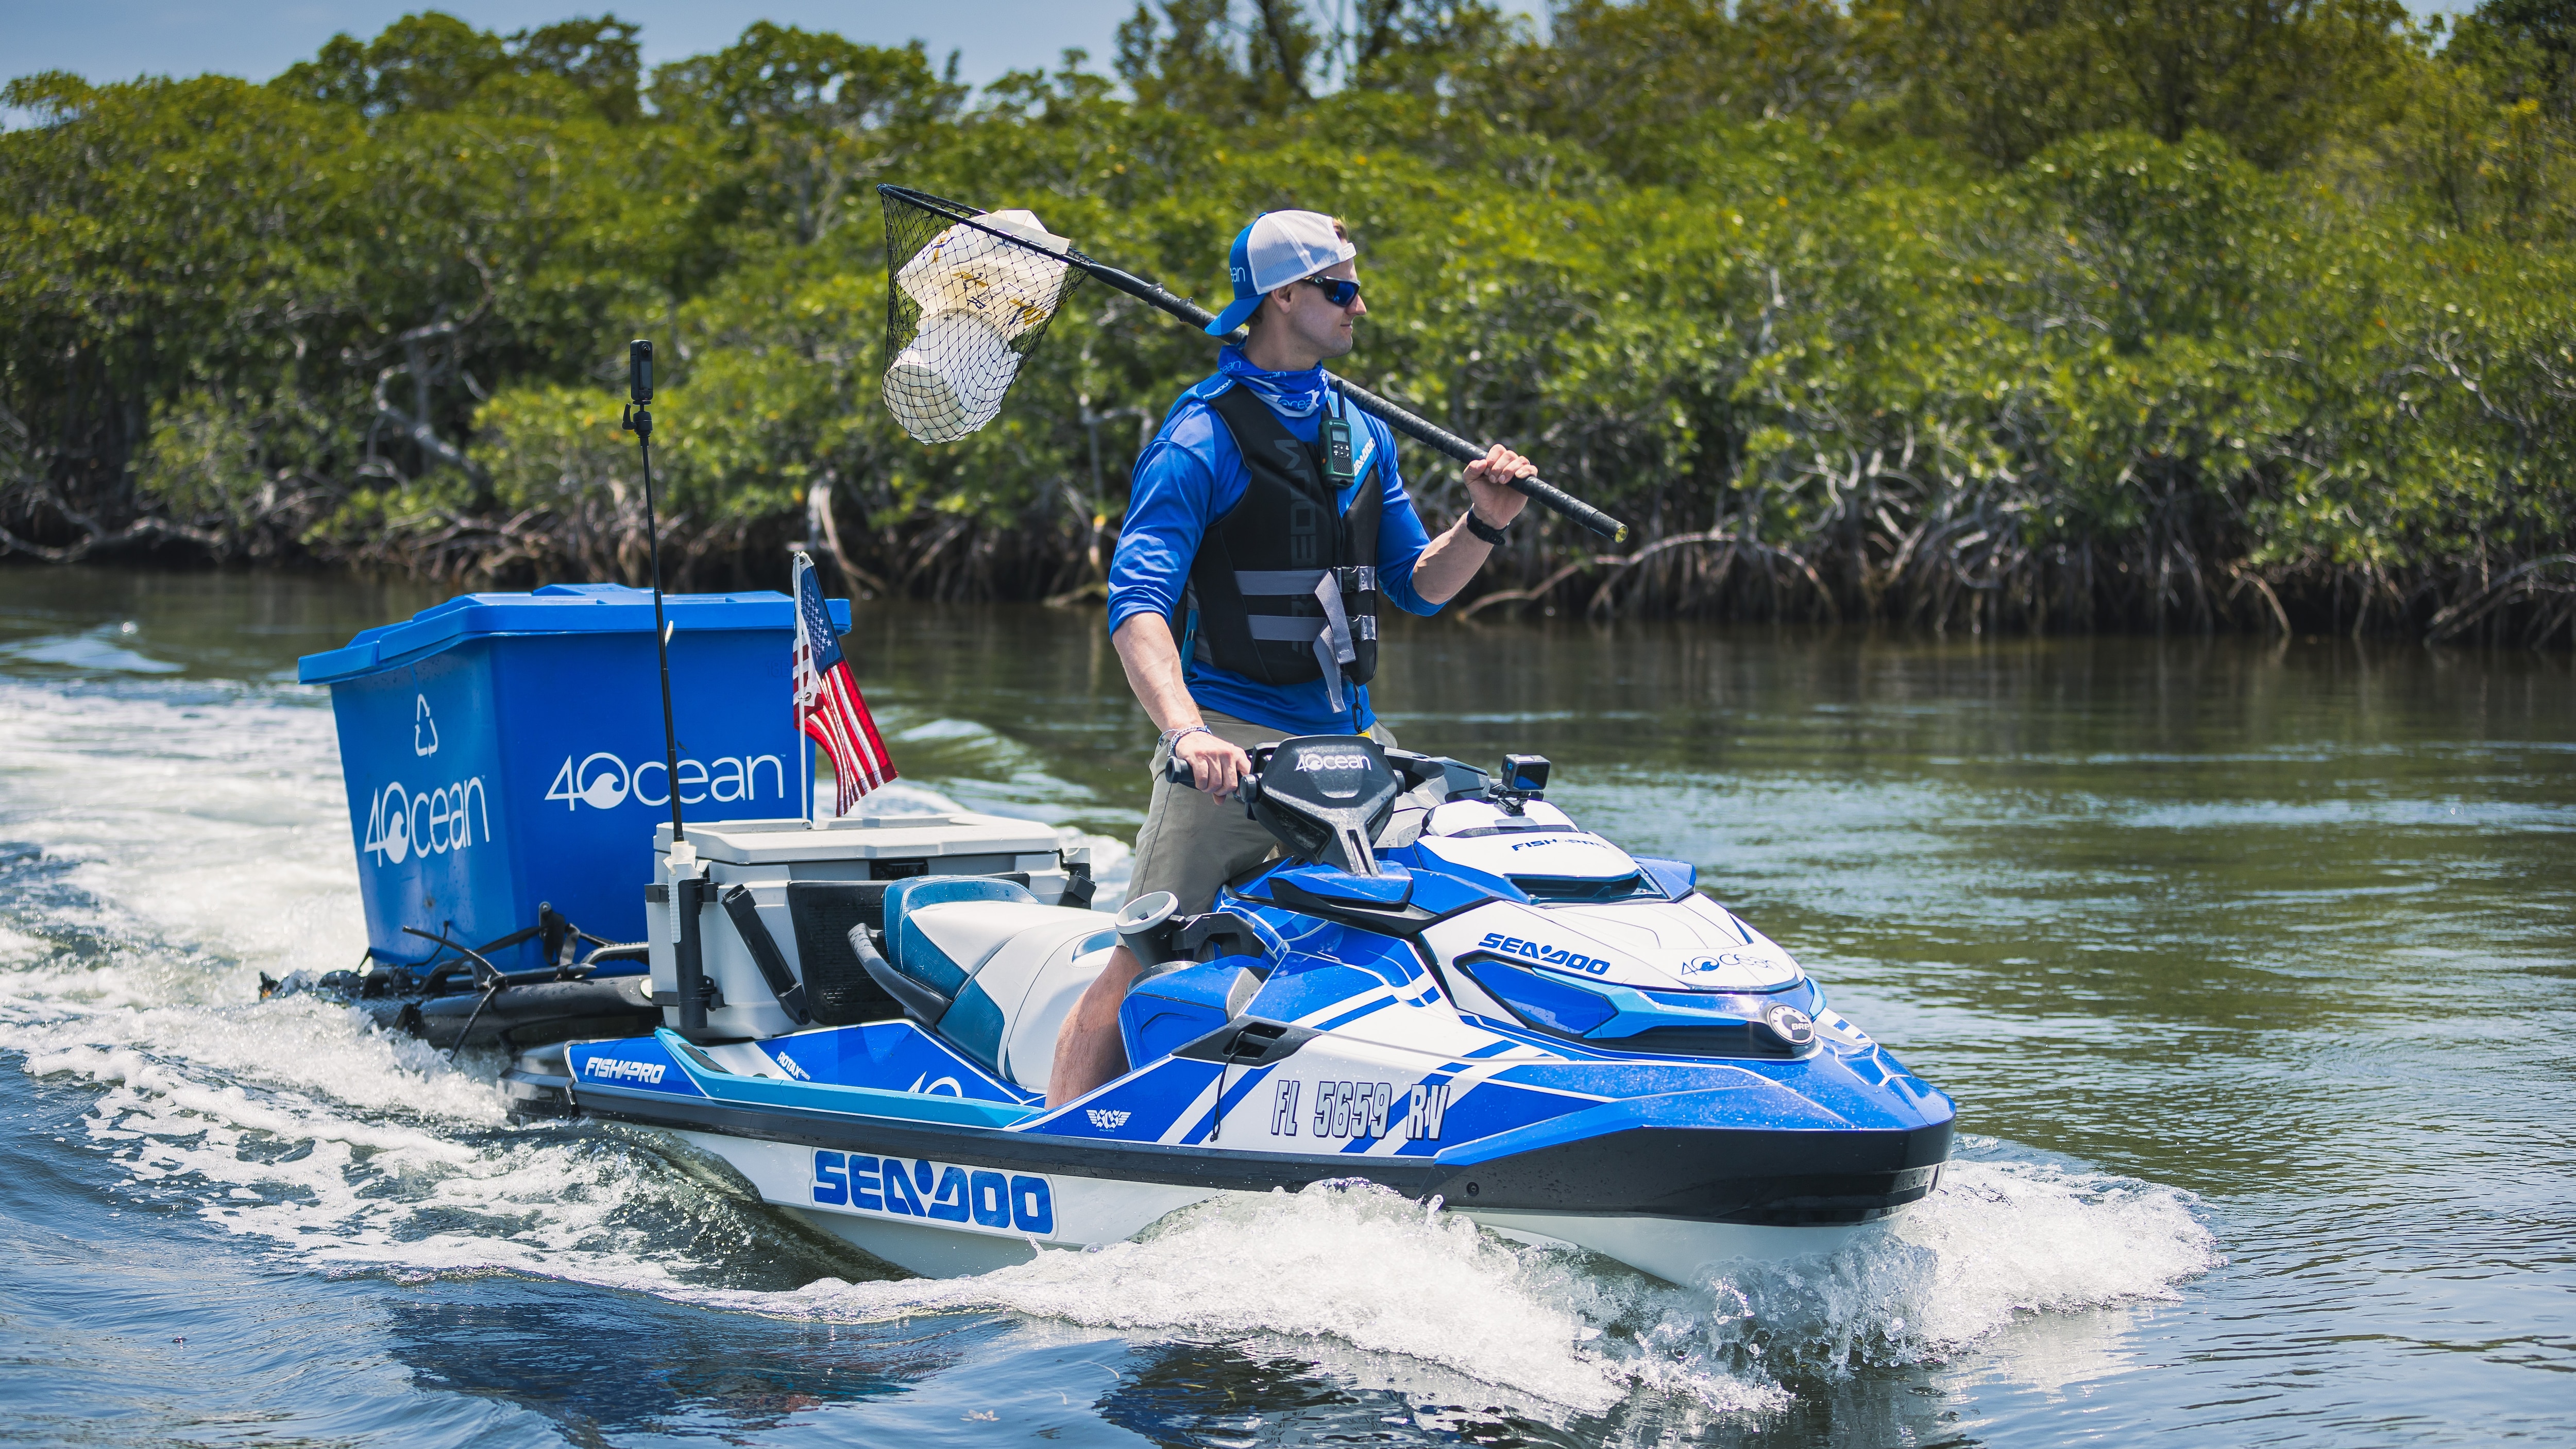 4ocean's Alex Schulze riding around a Sea-Doo FishPro personal watercraft